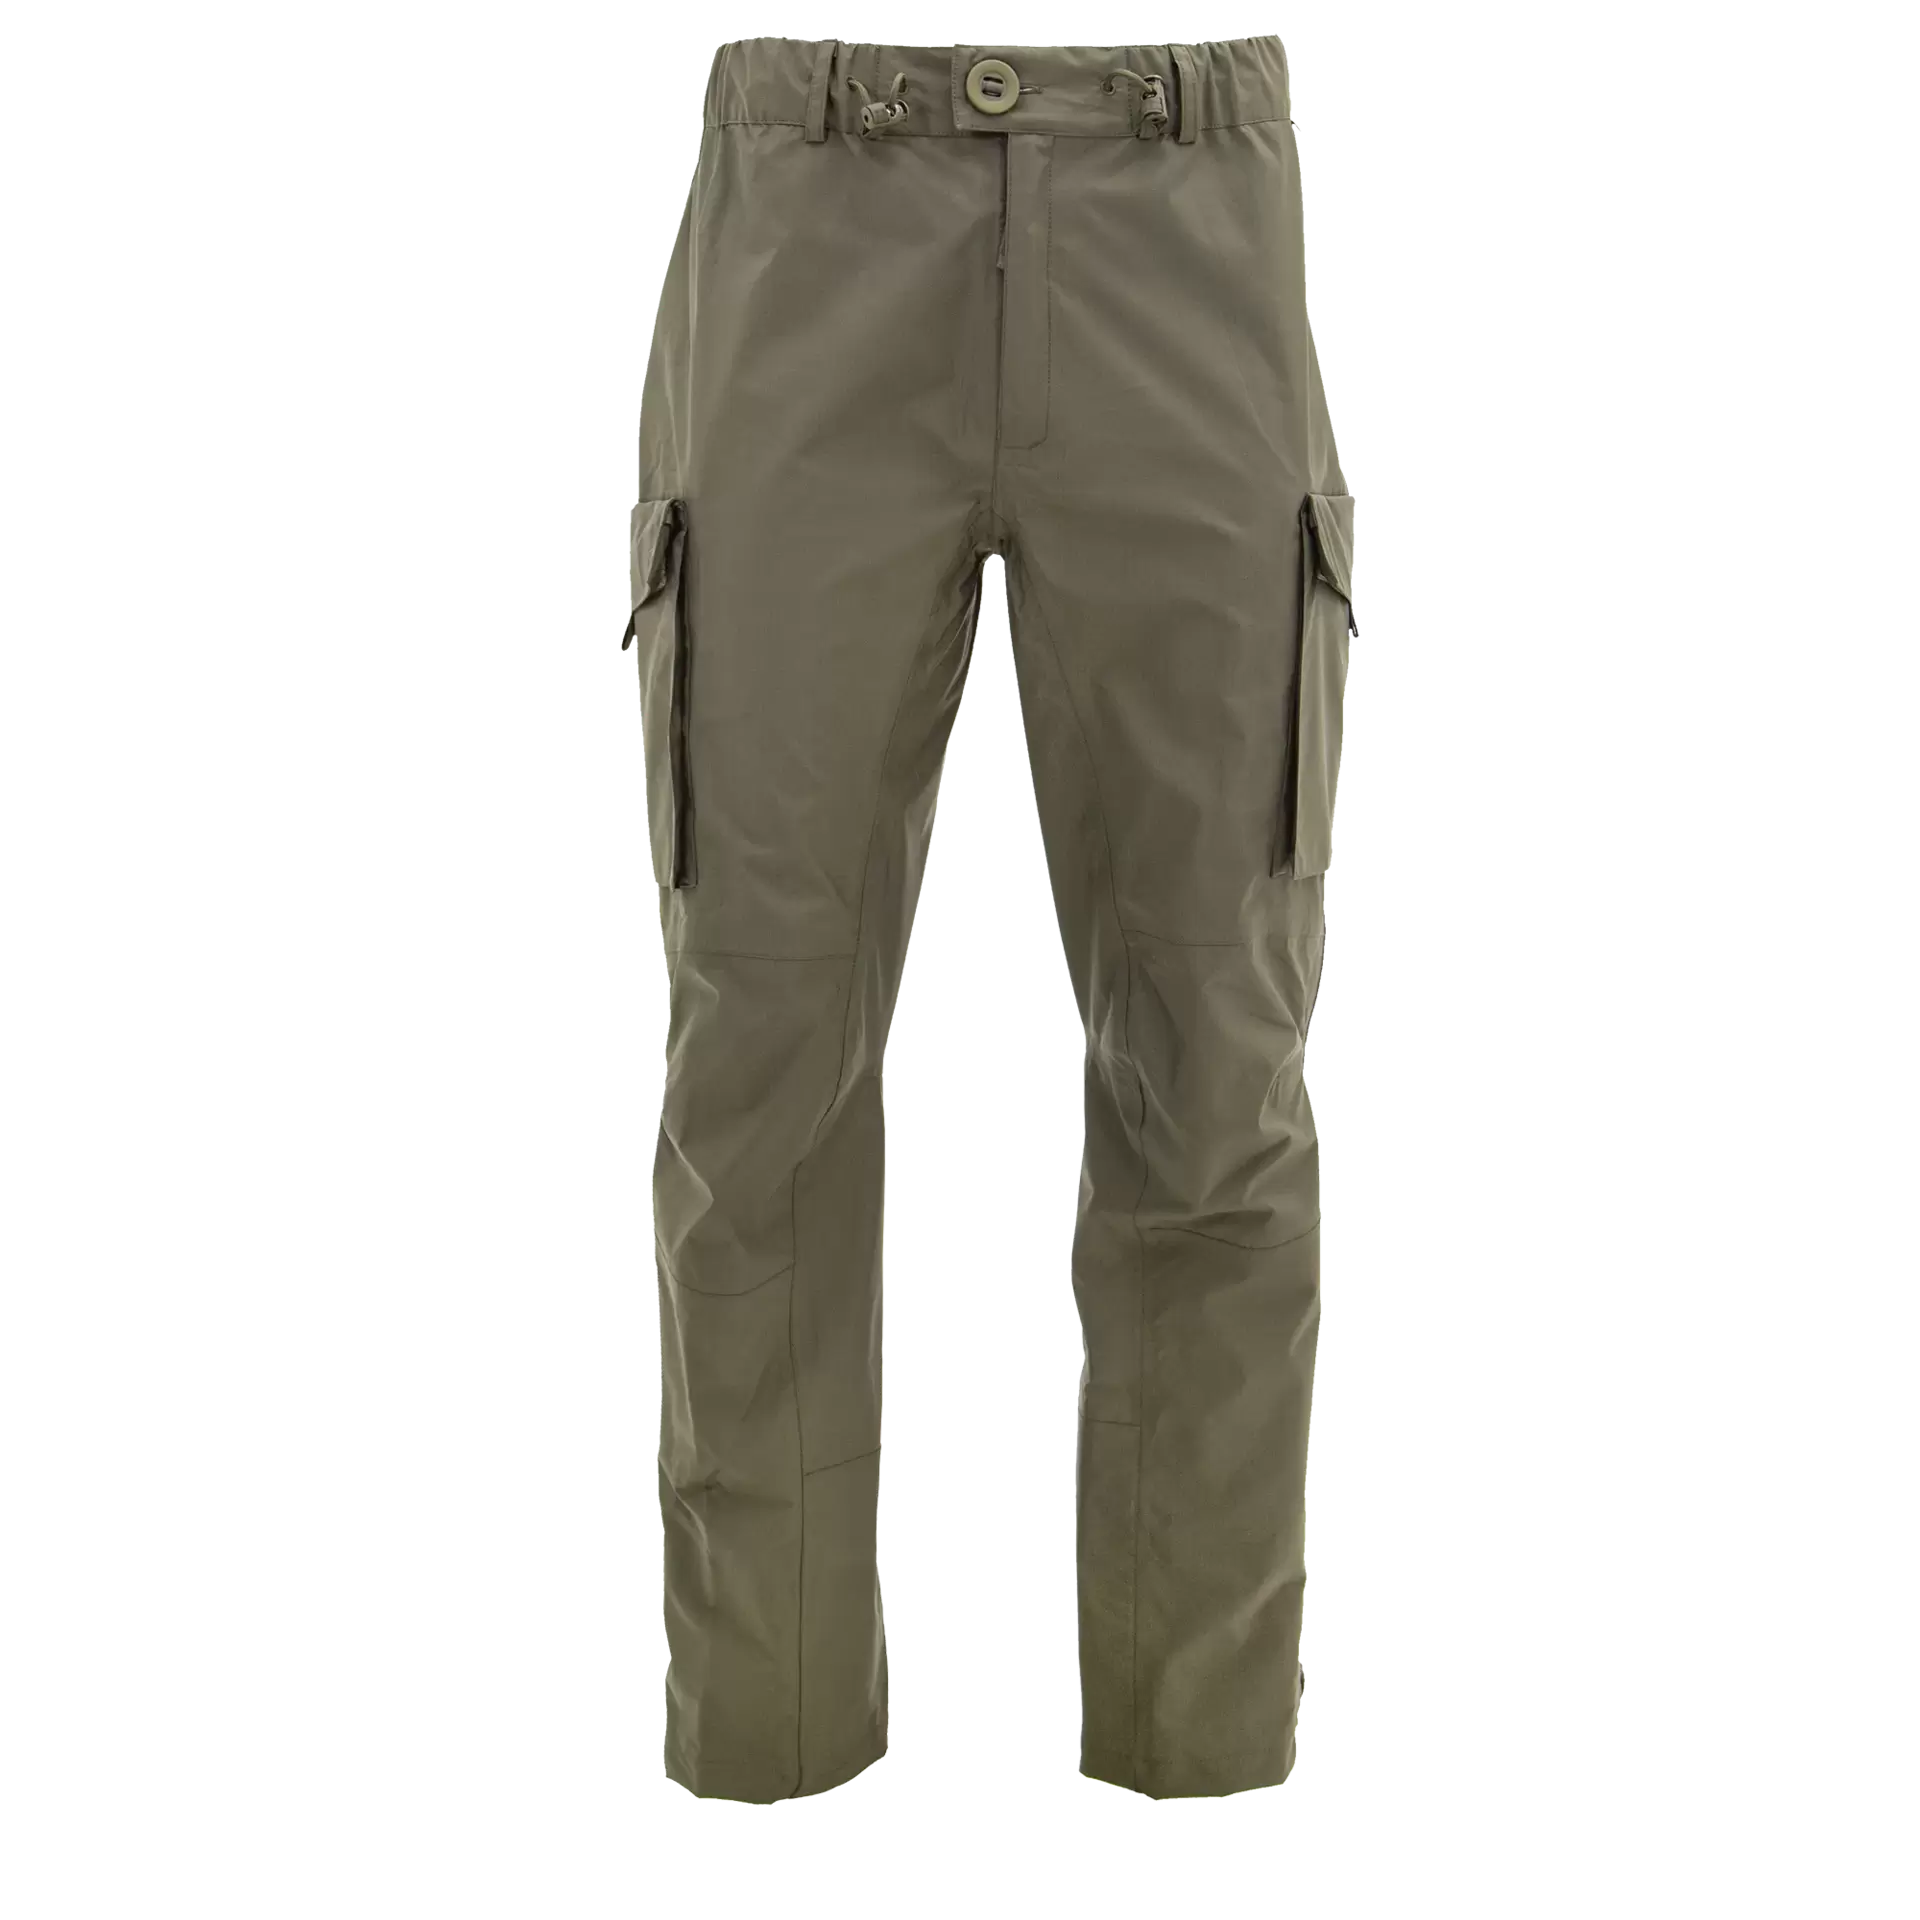 Survivors - Thermal Elastic Pants Green Xl/Xxl